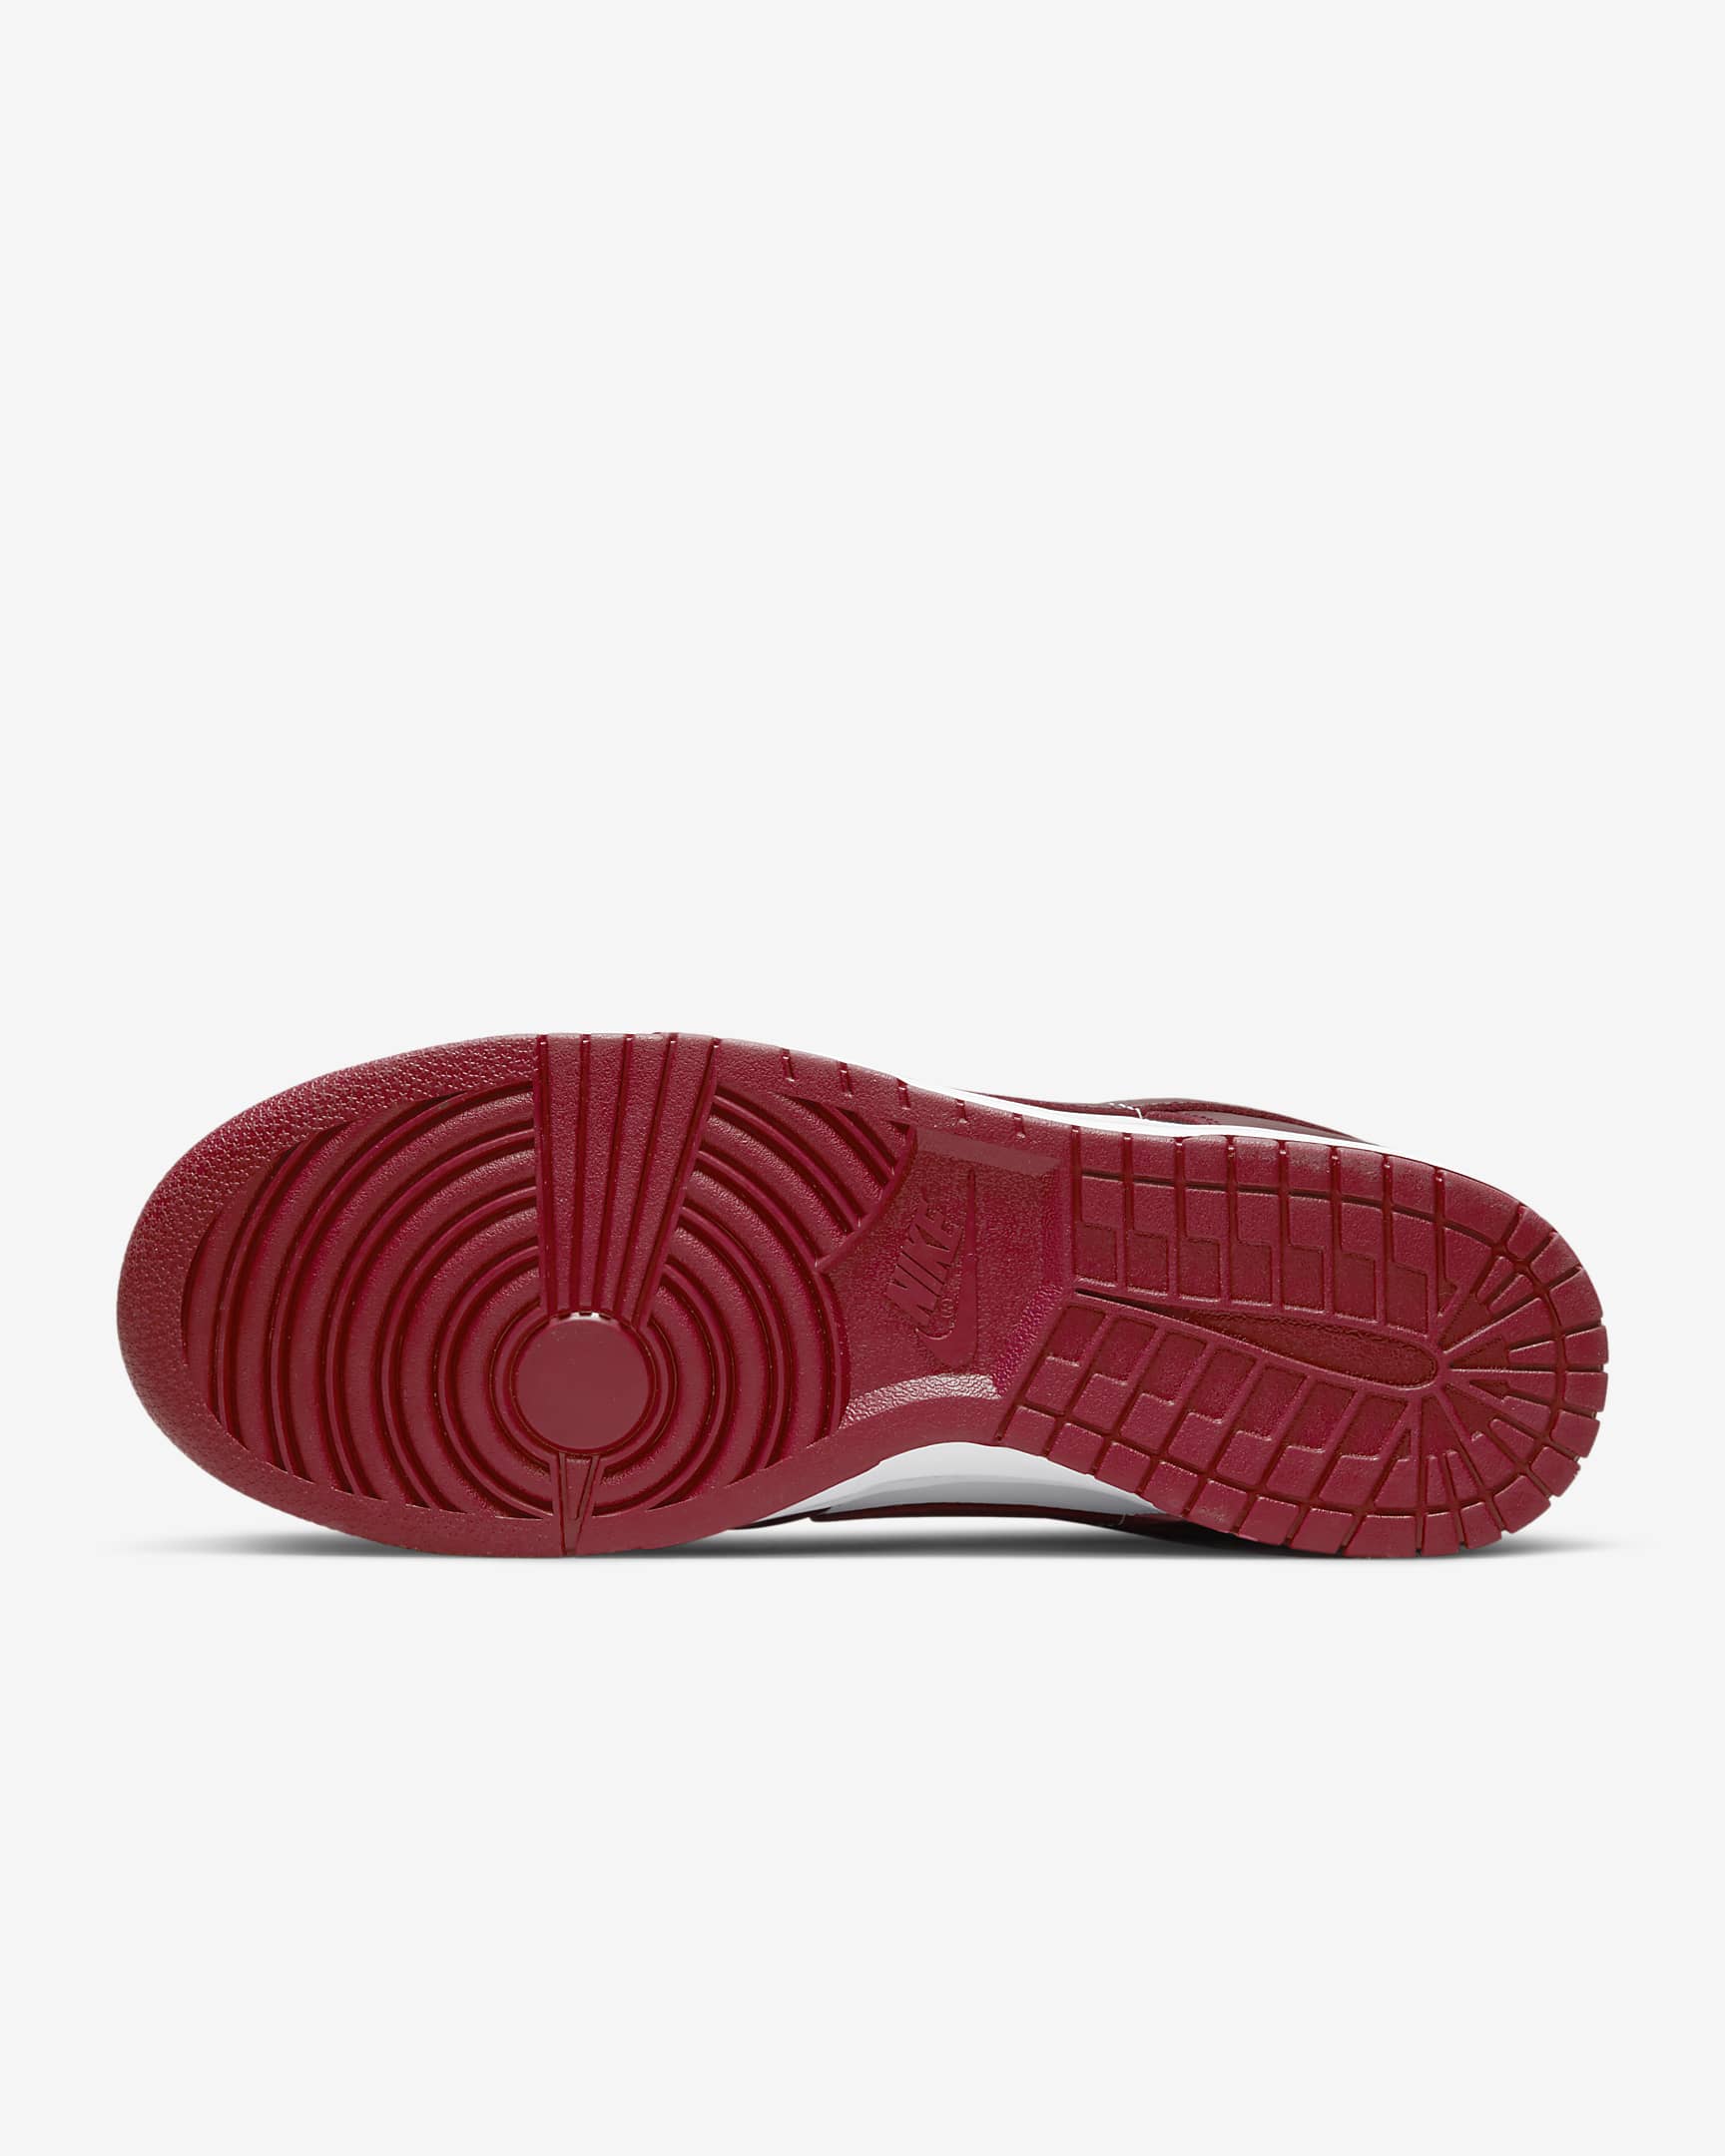 Nike Dunk Low Retro Men's Shoe - Team Red/White/Team Red